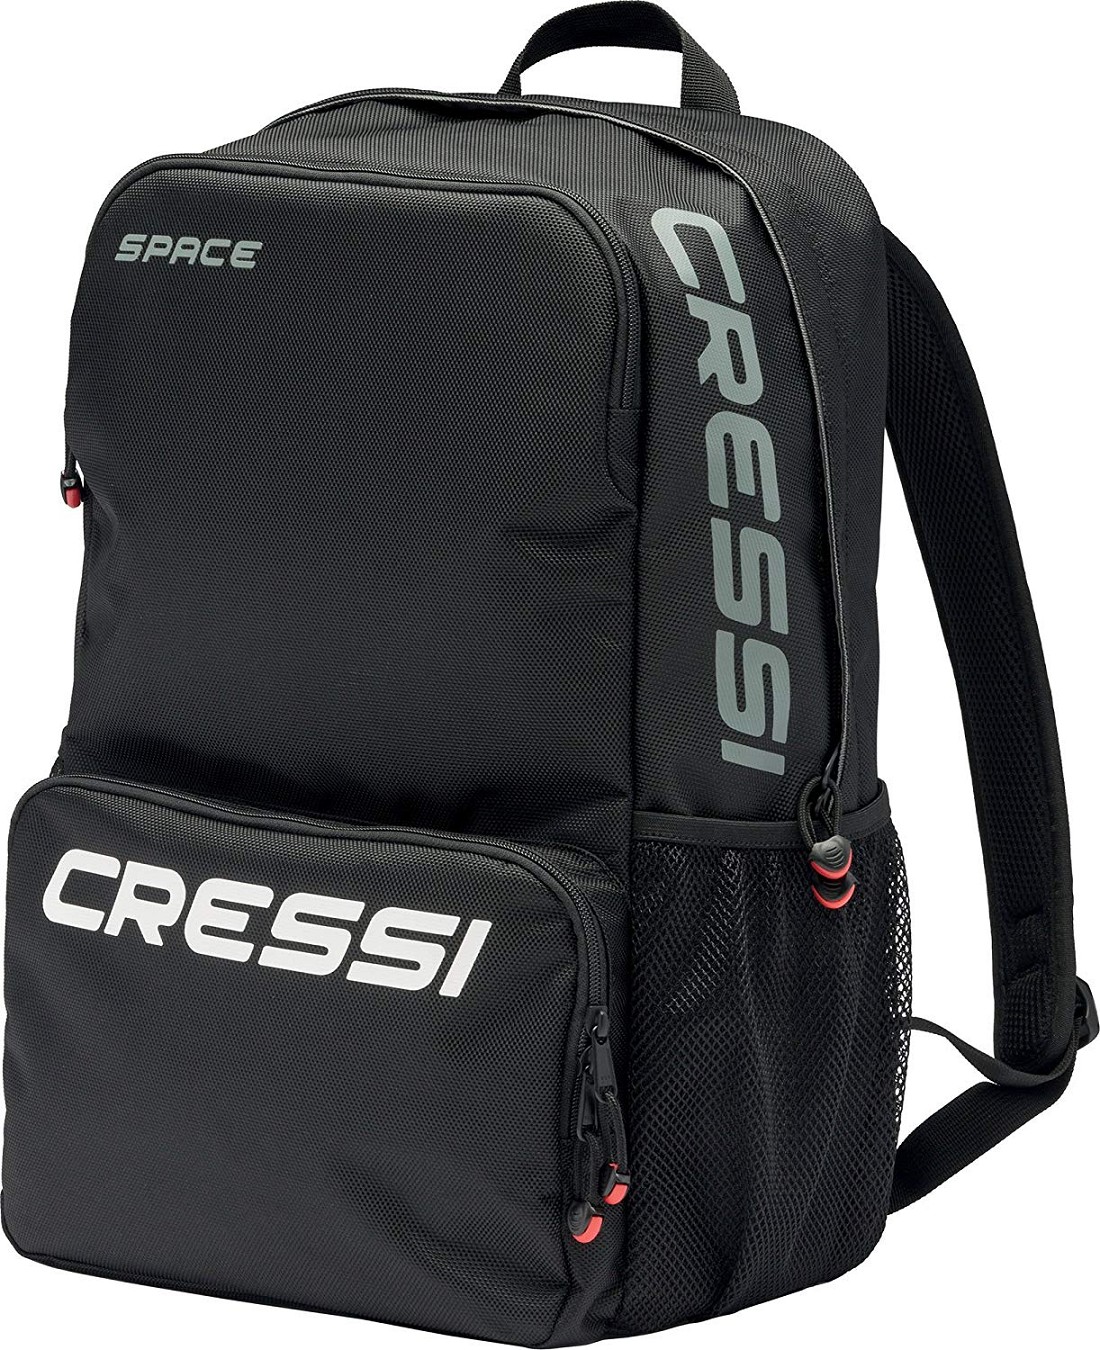 Cressi Unisex -Erwachsene Sumba Bag Sportrucksack mit Netz